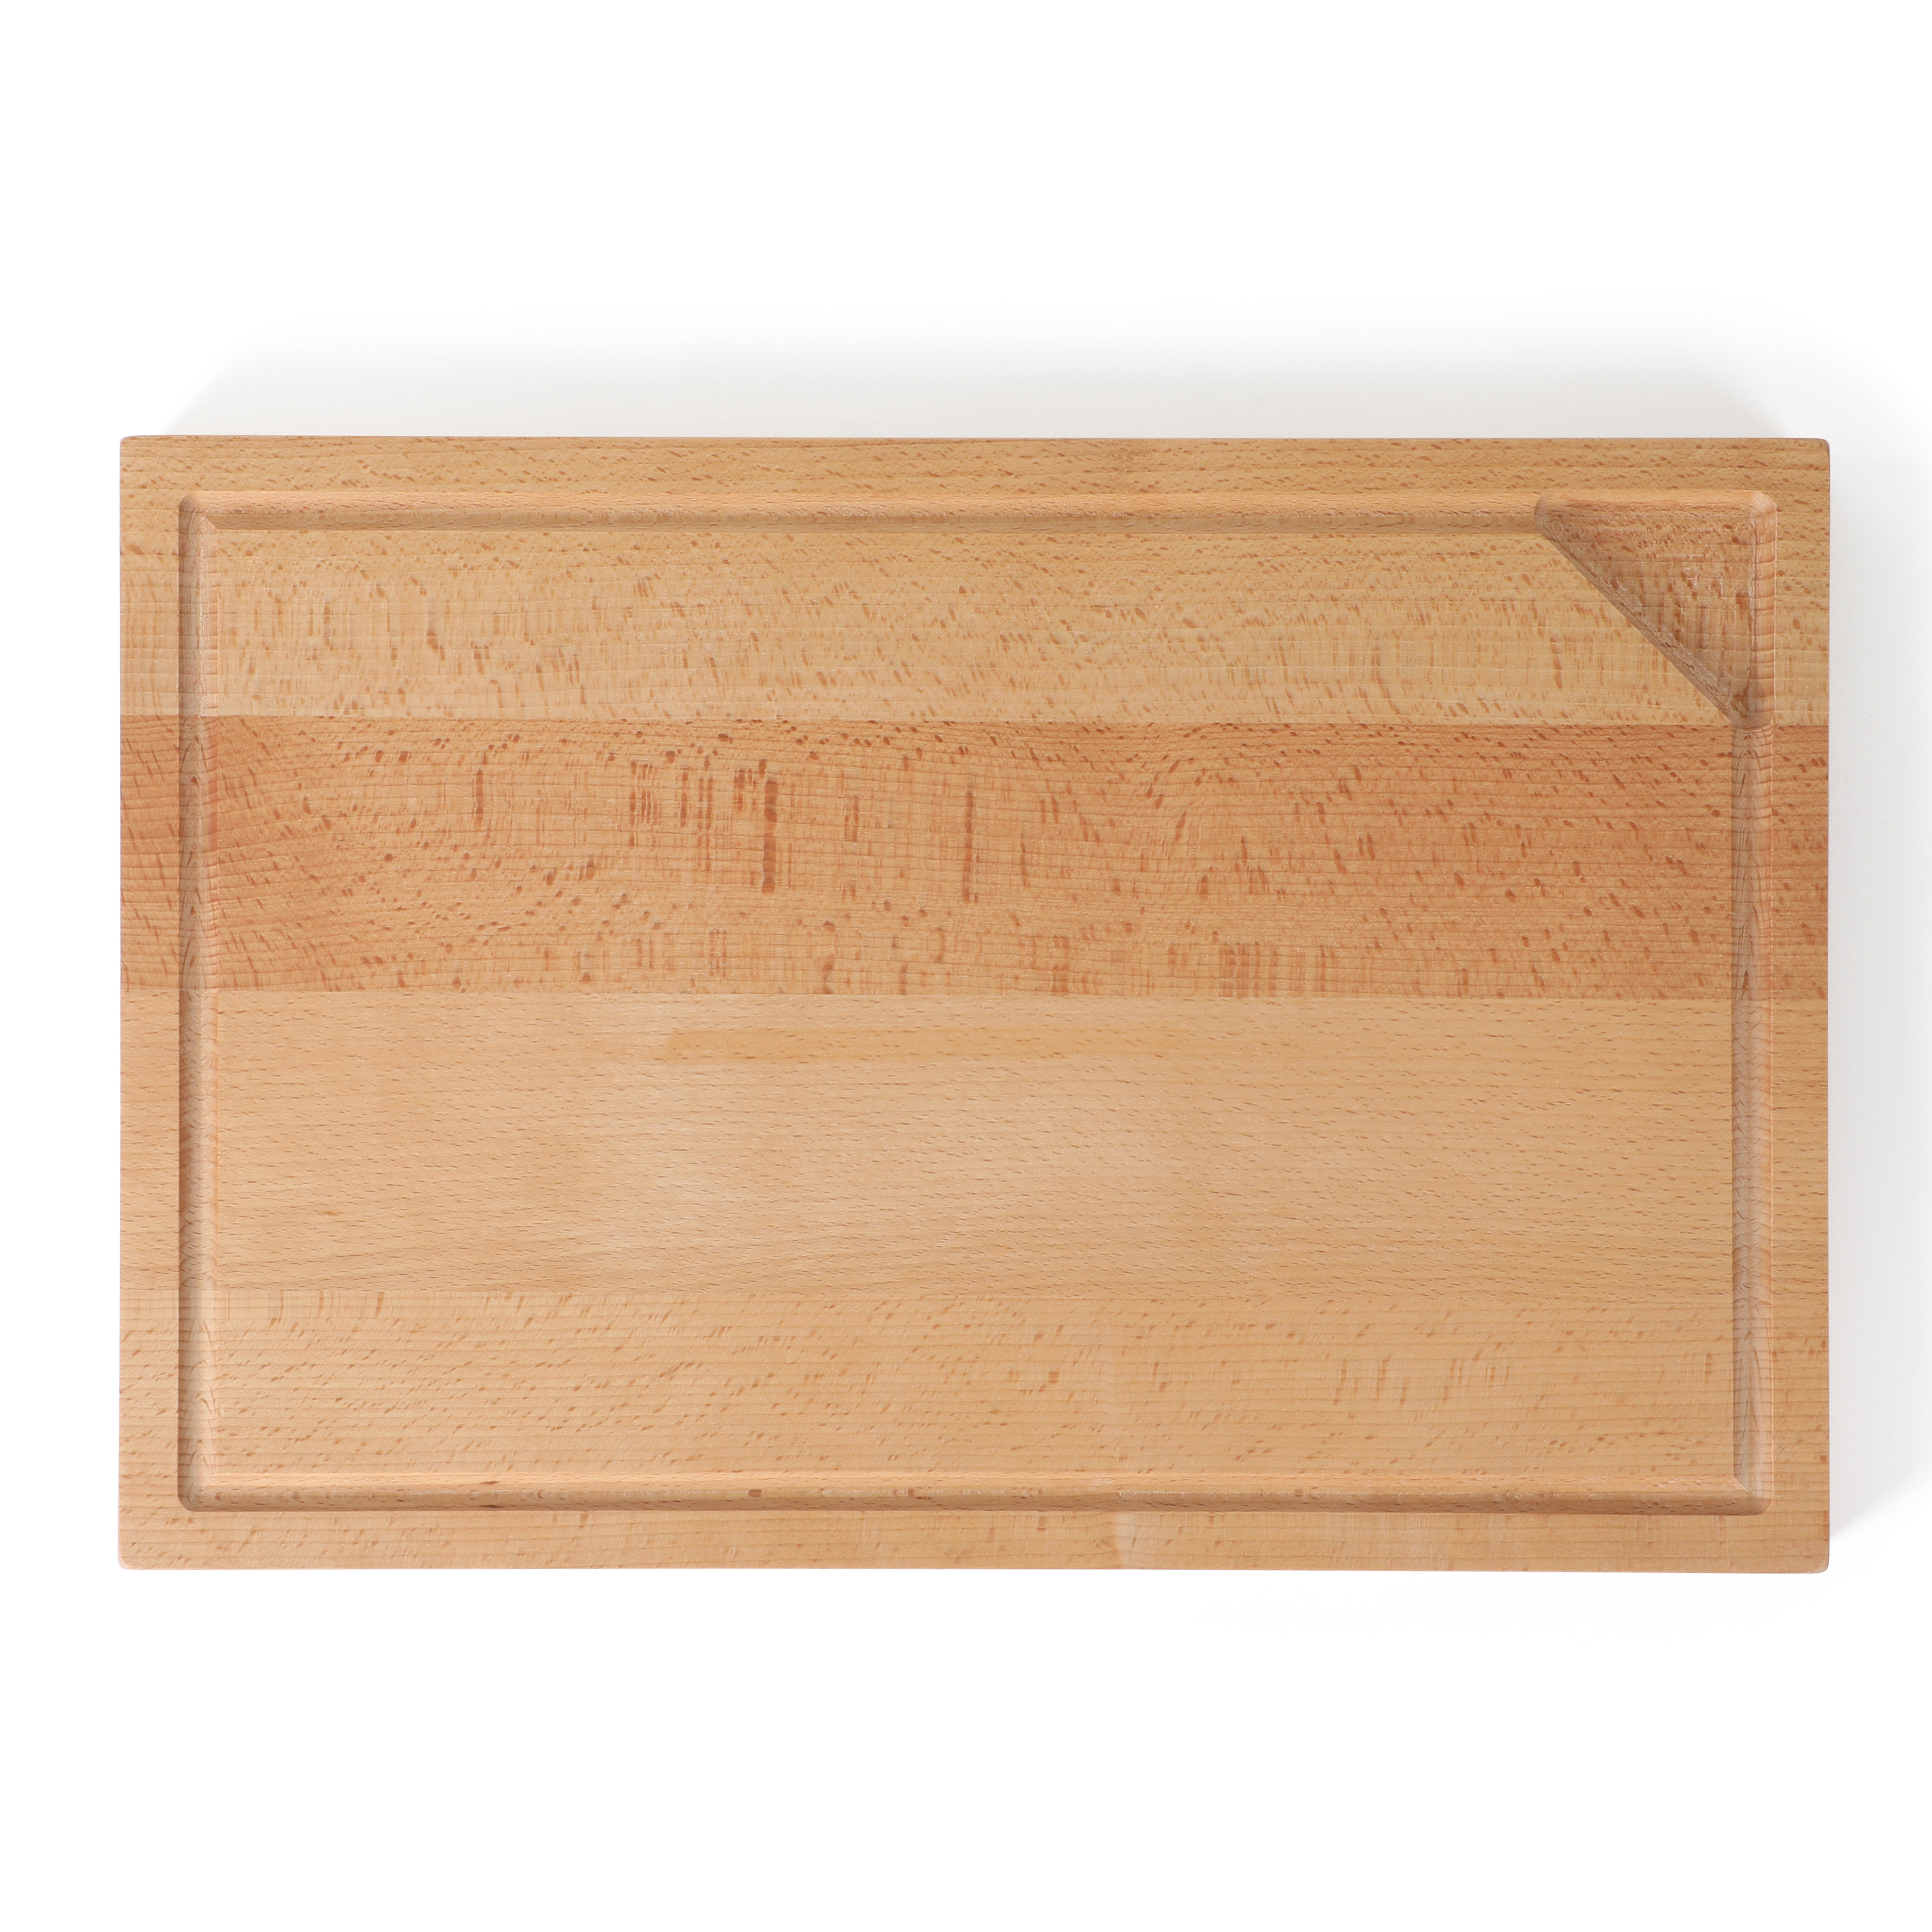 Martha Stewart Lochner 18 x 12 Beech Wood Cutting Board w/Juice Groove